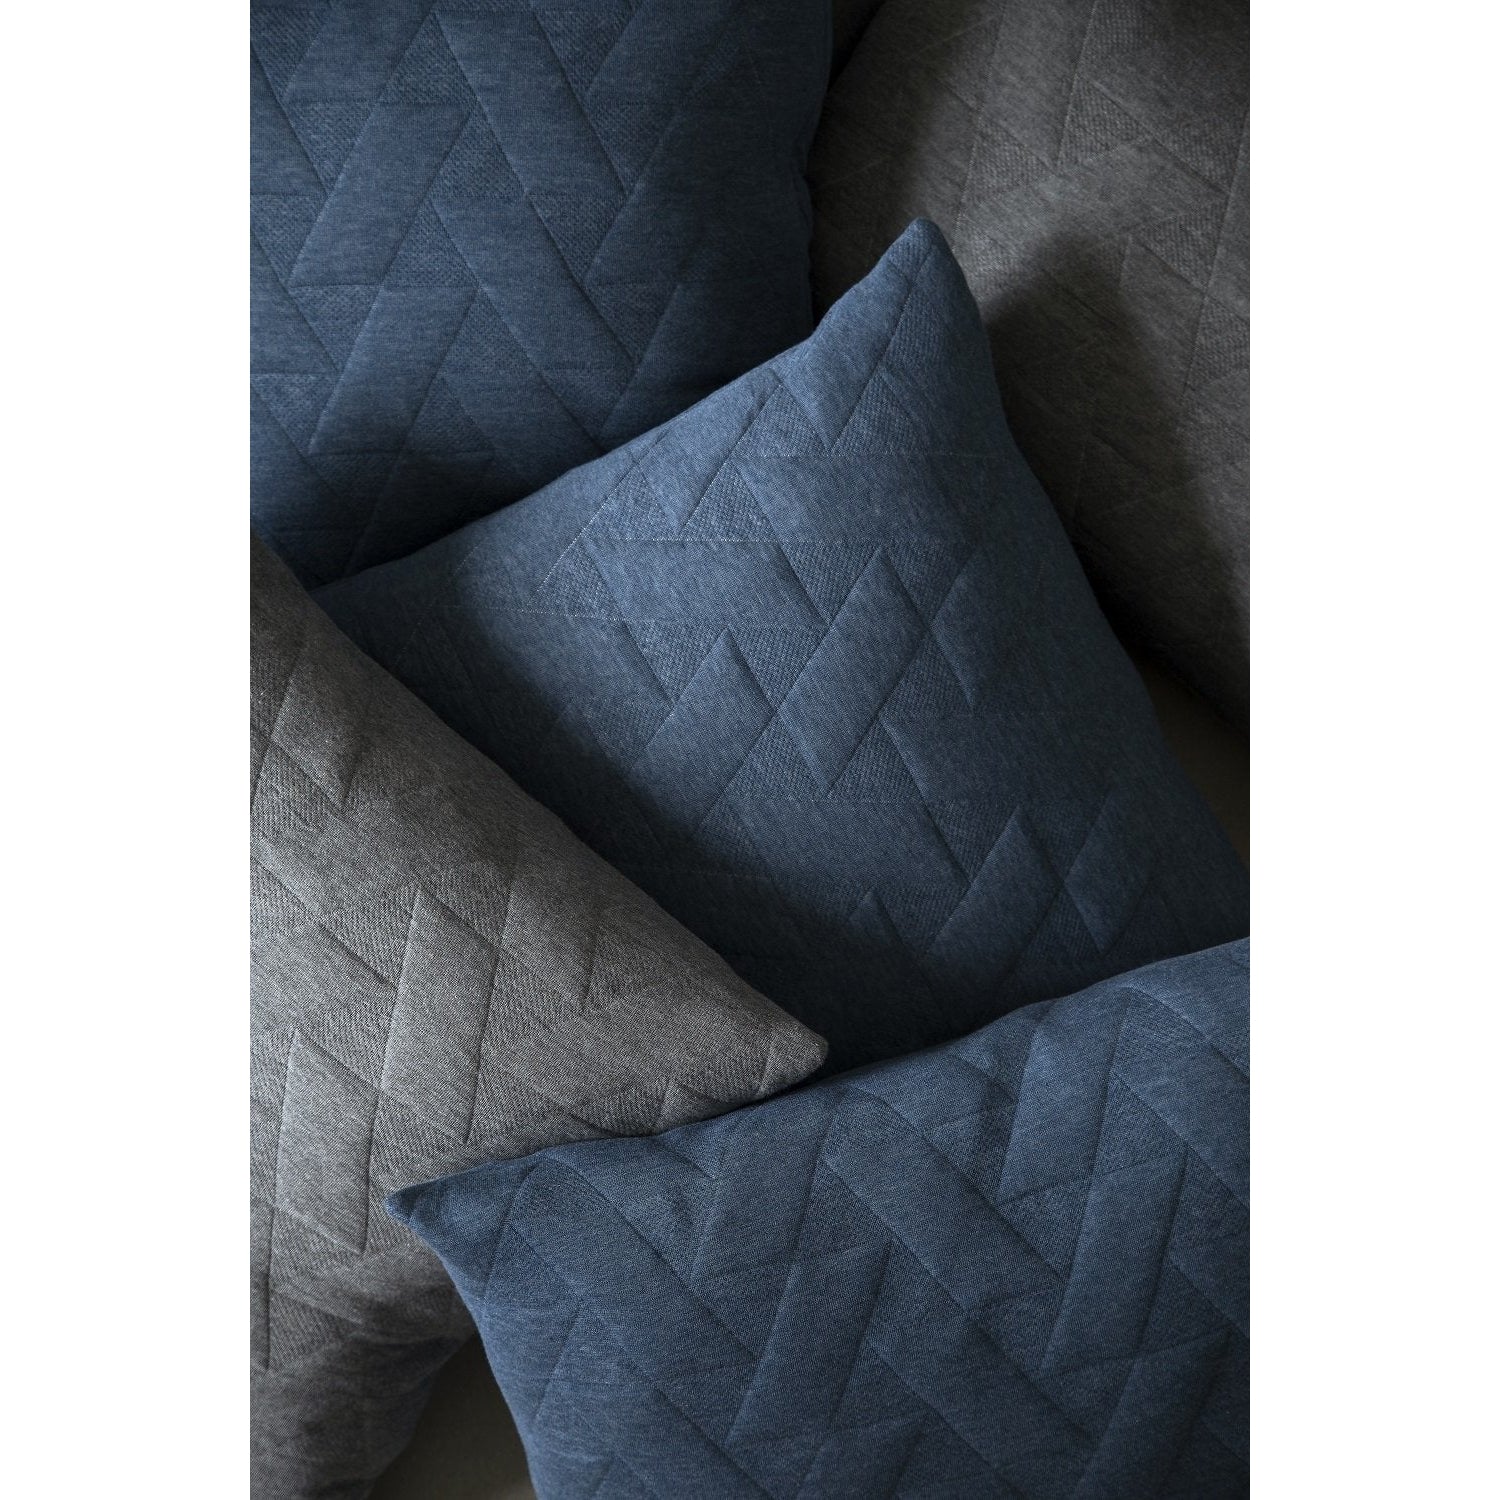 Architectmade Finn Juhl Pattern Cushion, Gray 40x60